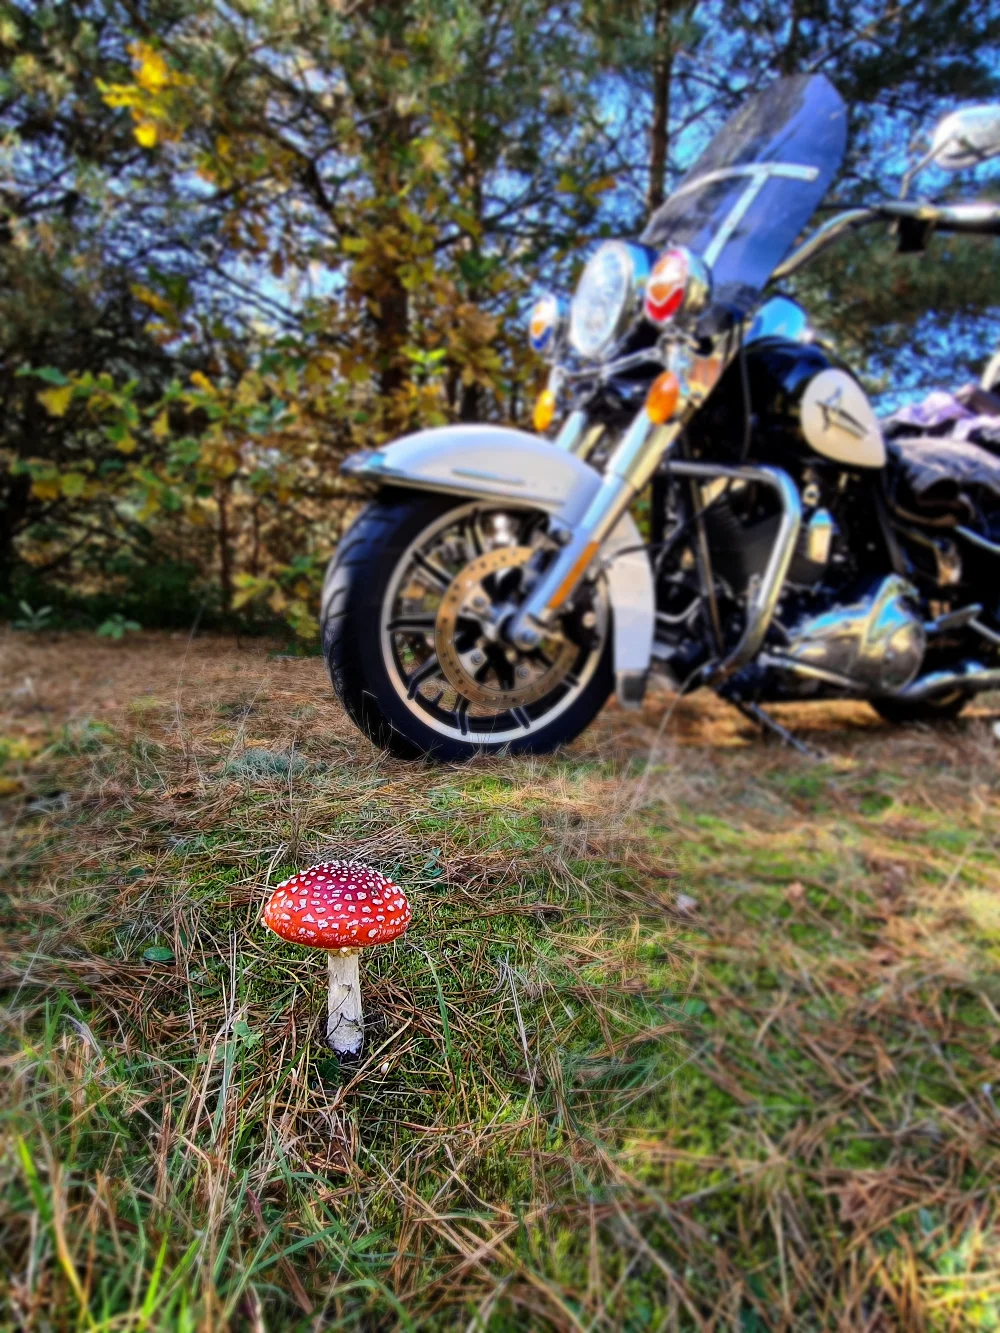 #autumn #autumnvibes #mushrooms #forest